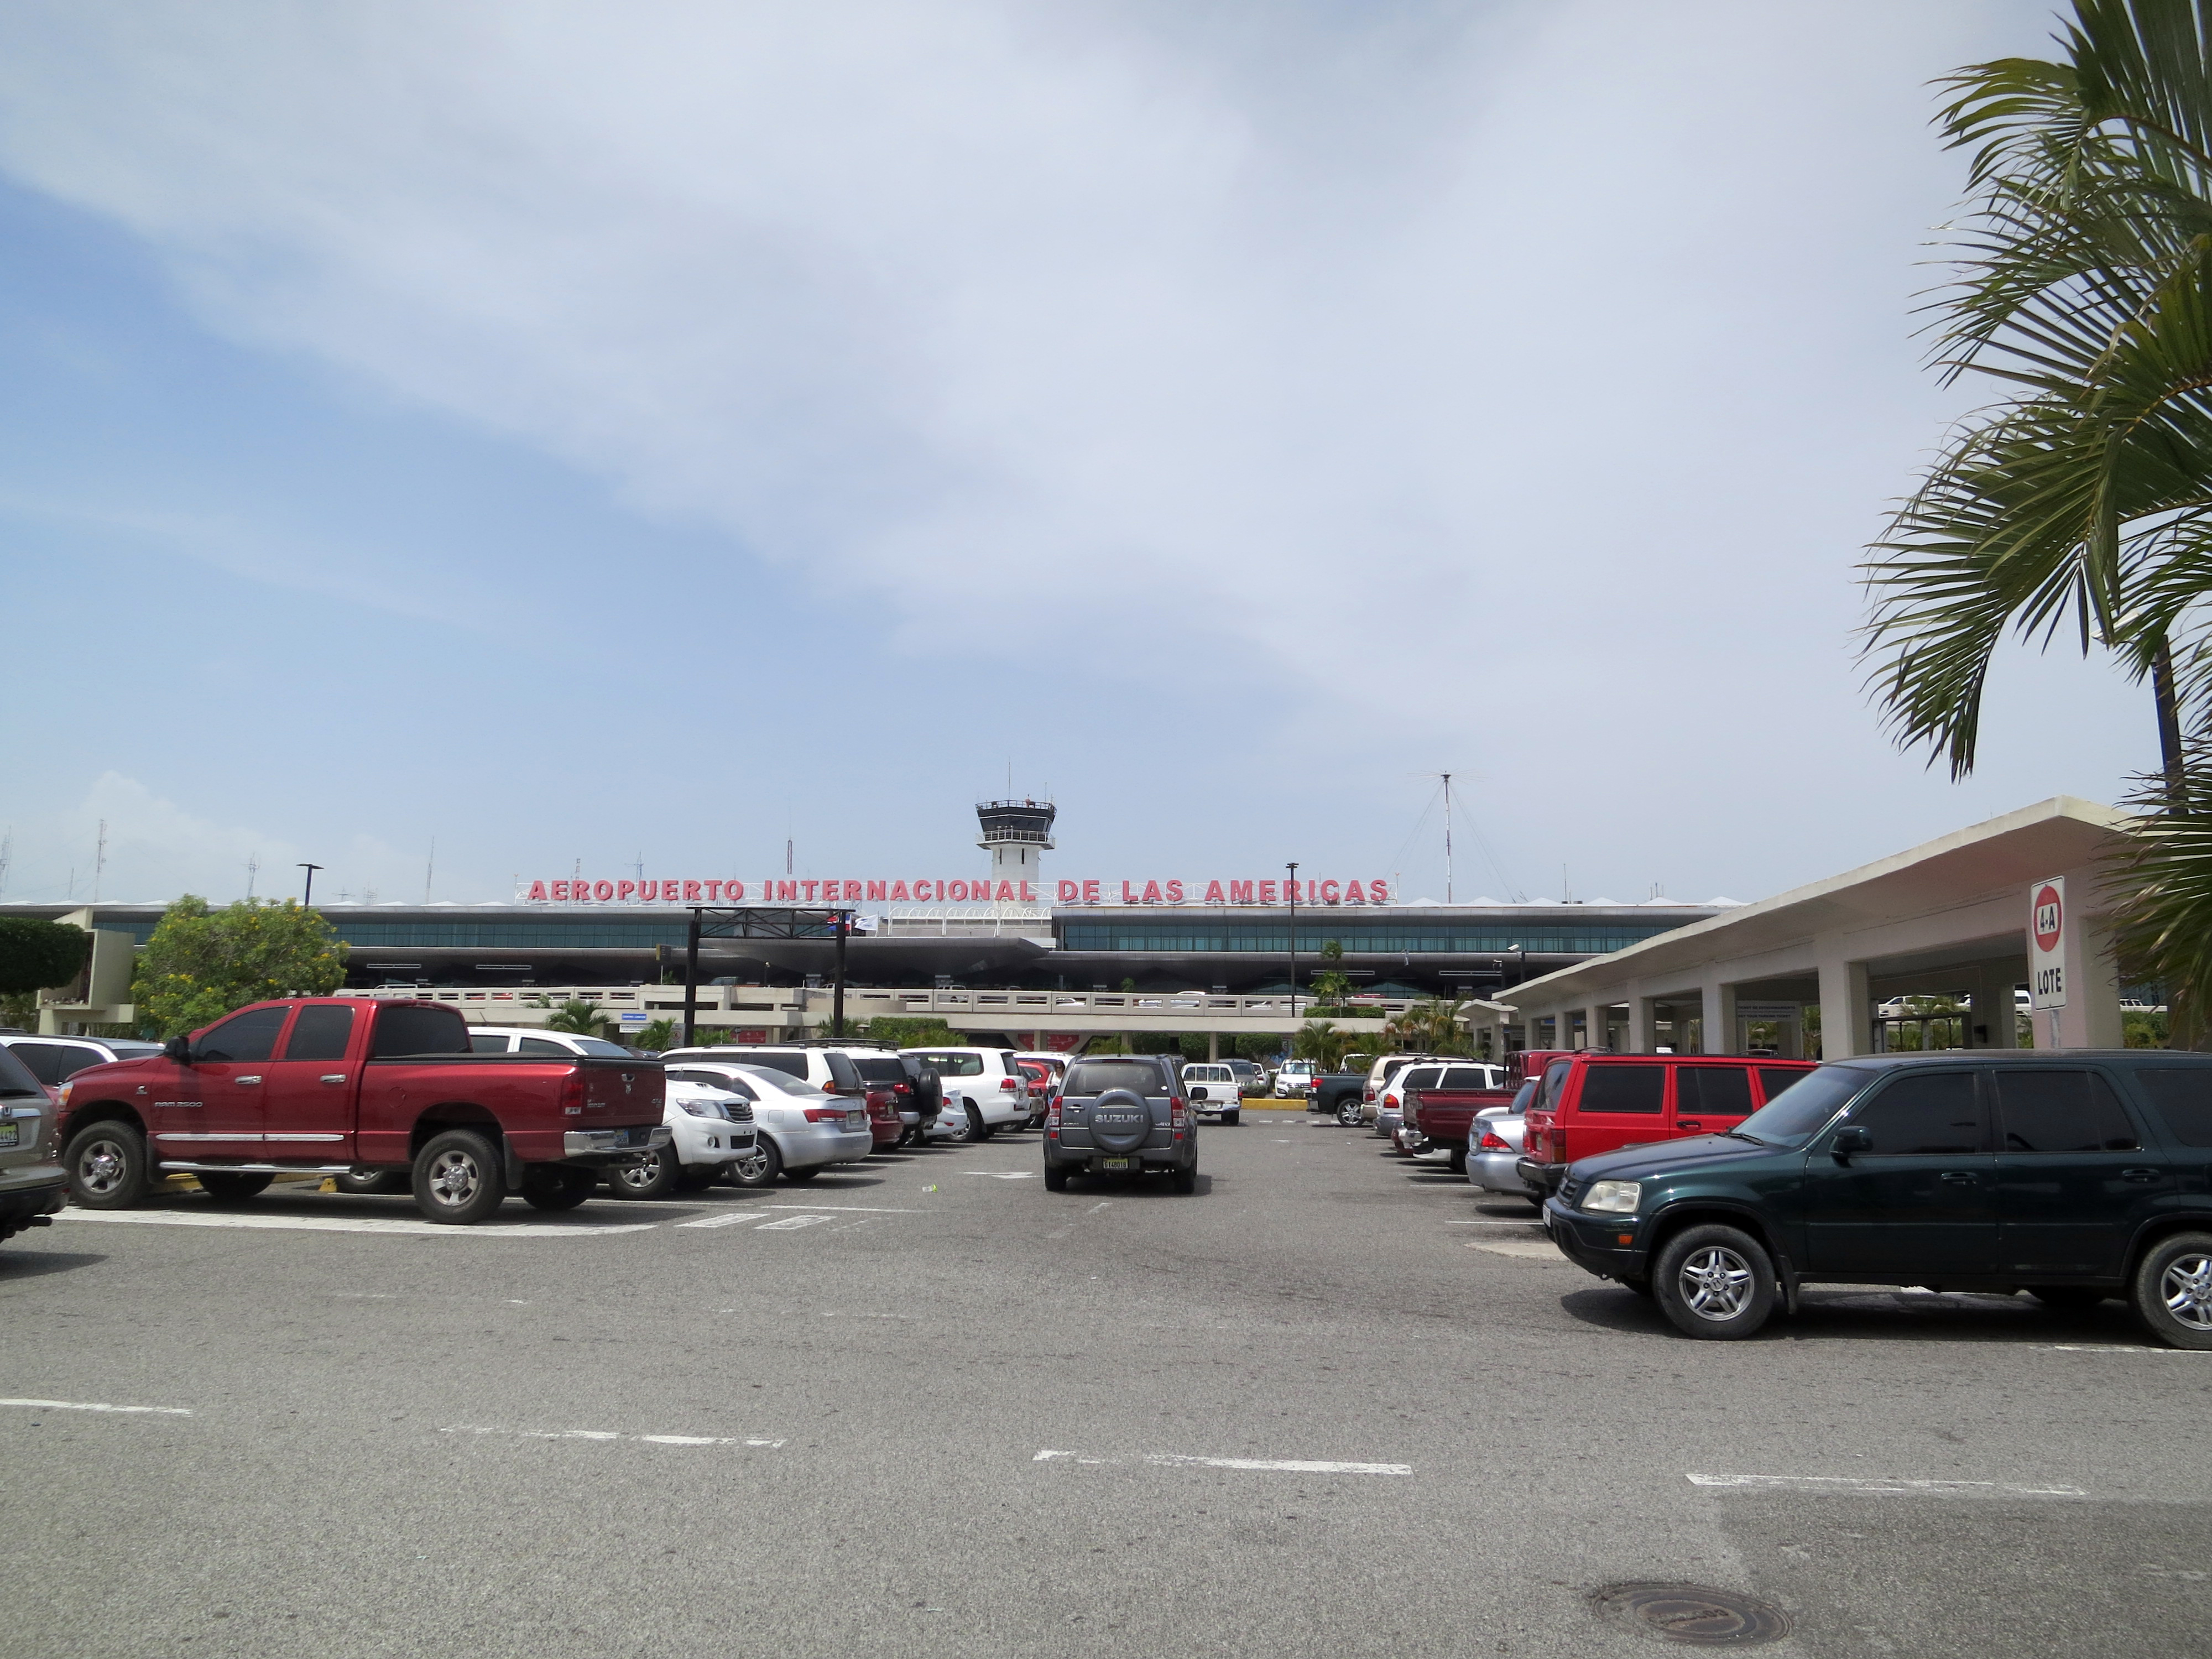 Las américas international airport photo